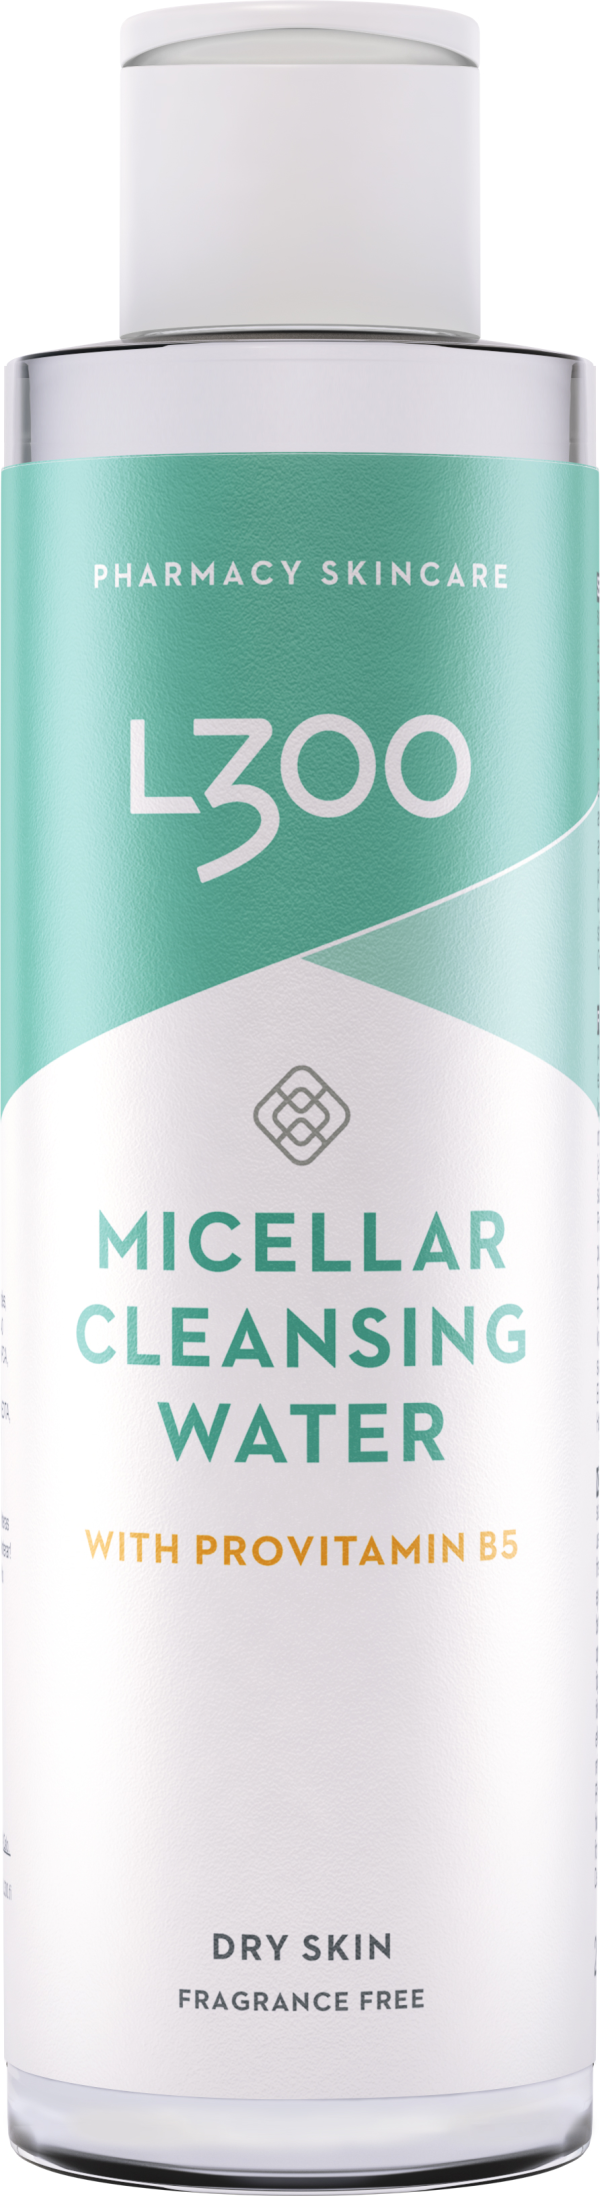 L300 Micellar Cleansing Water 200 ml